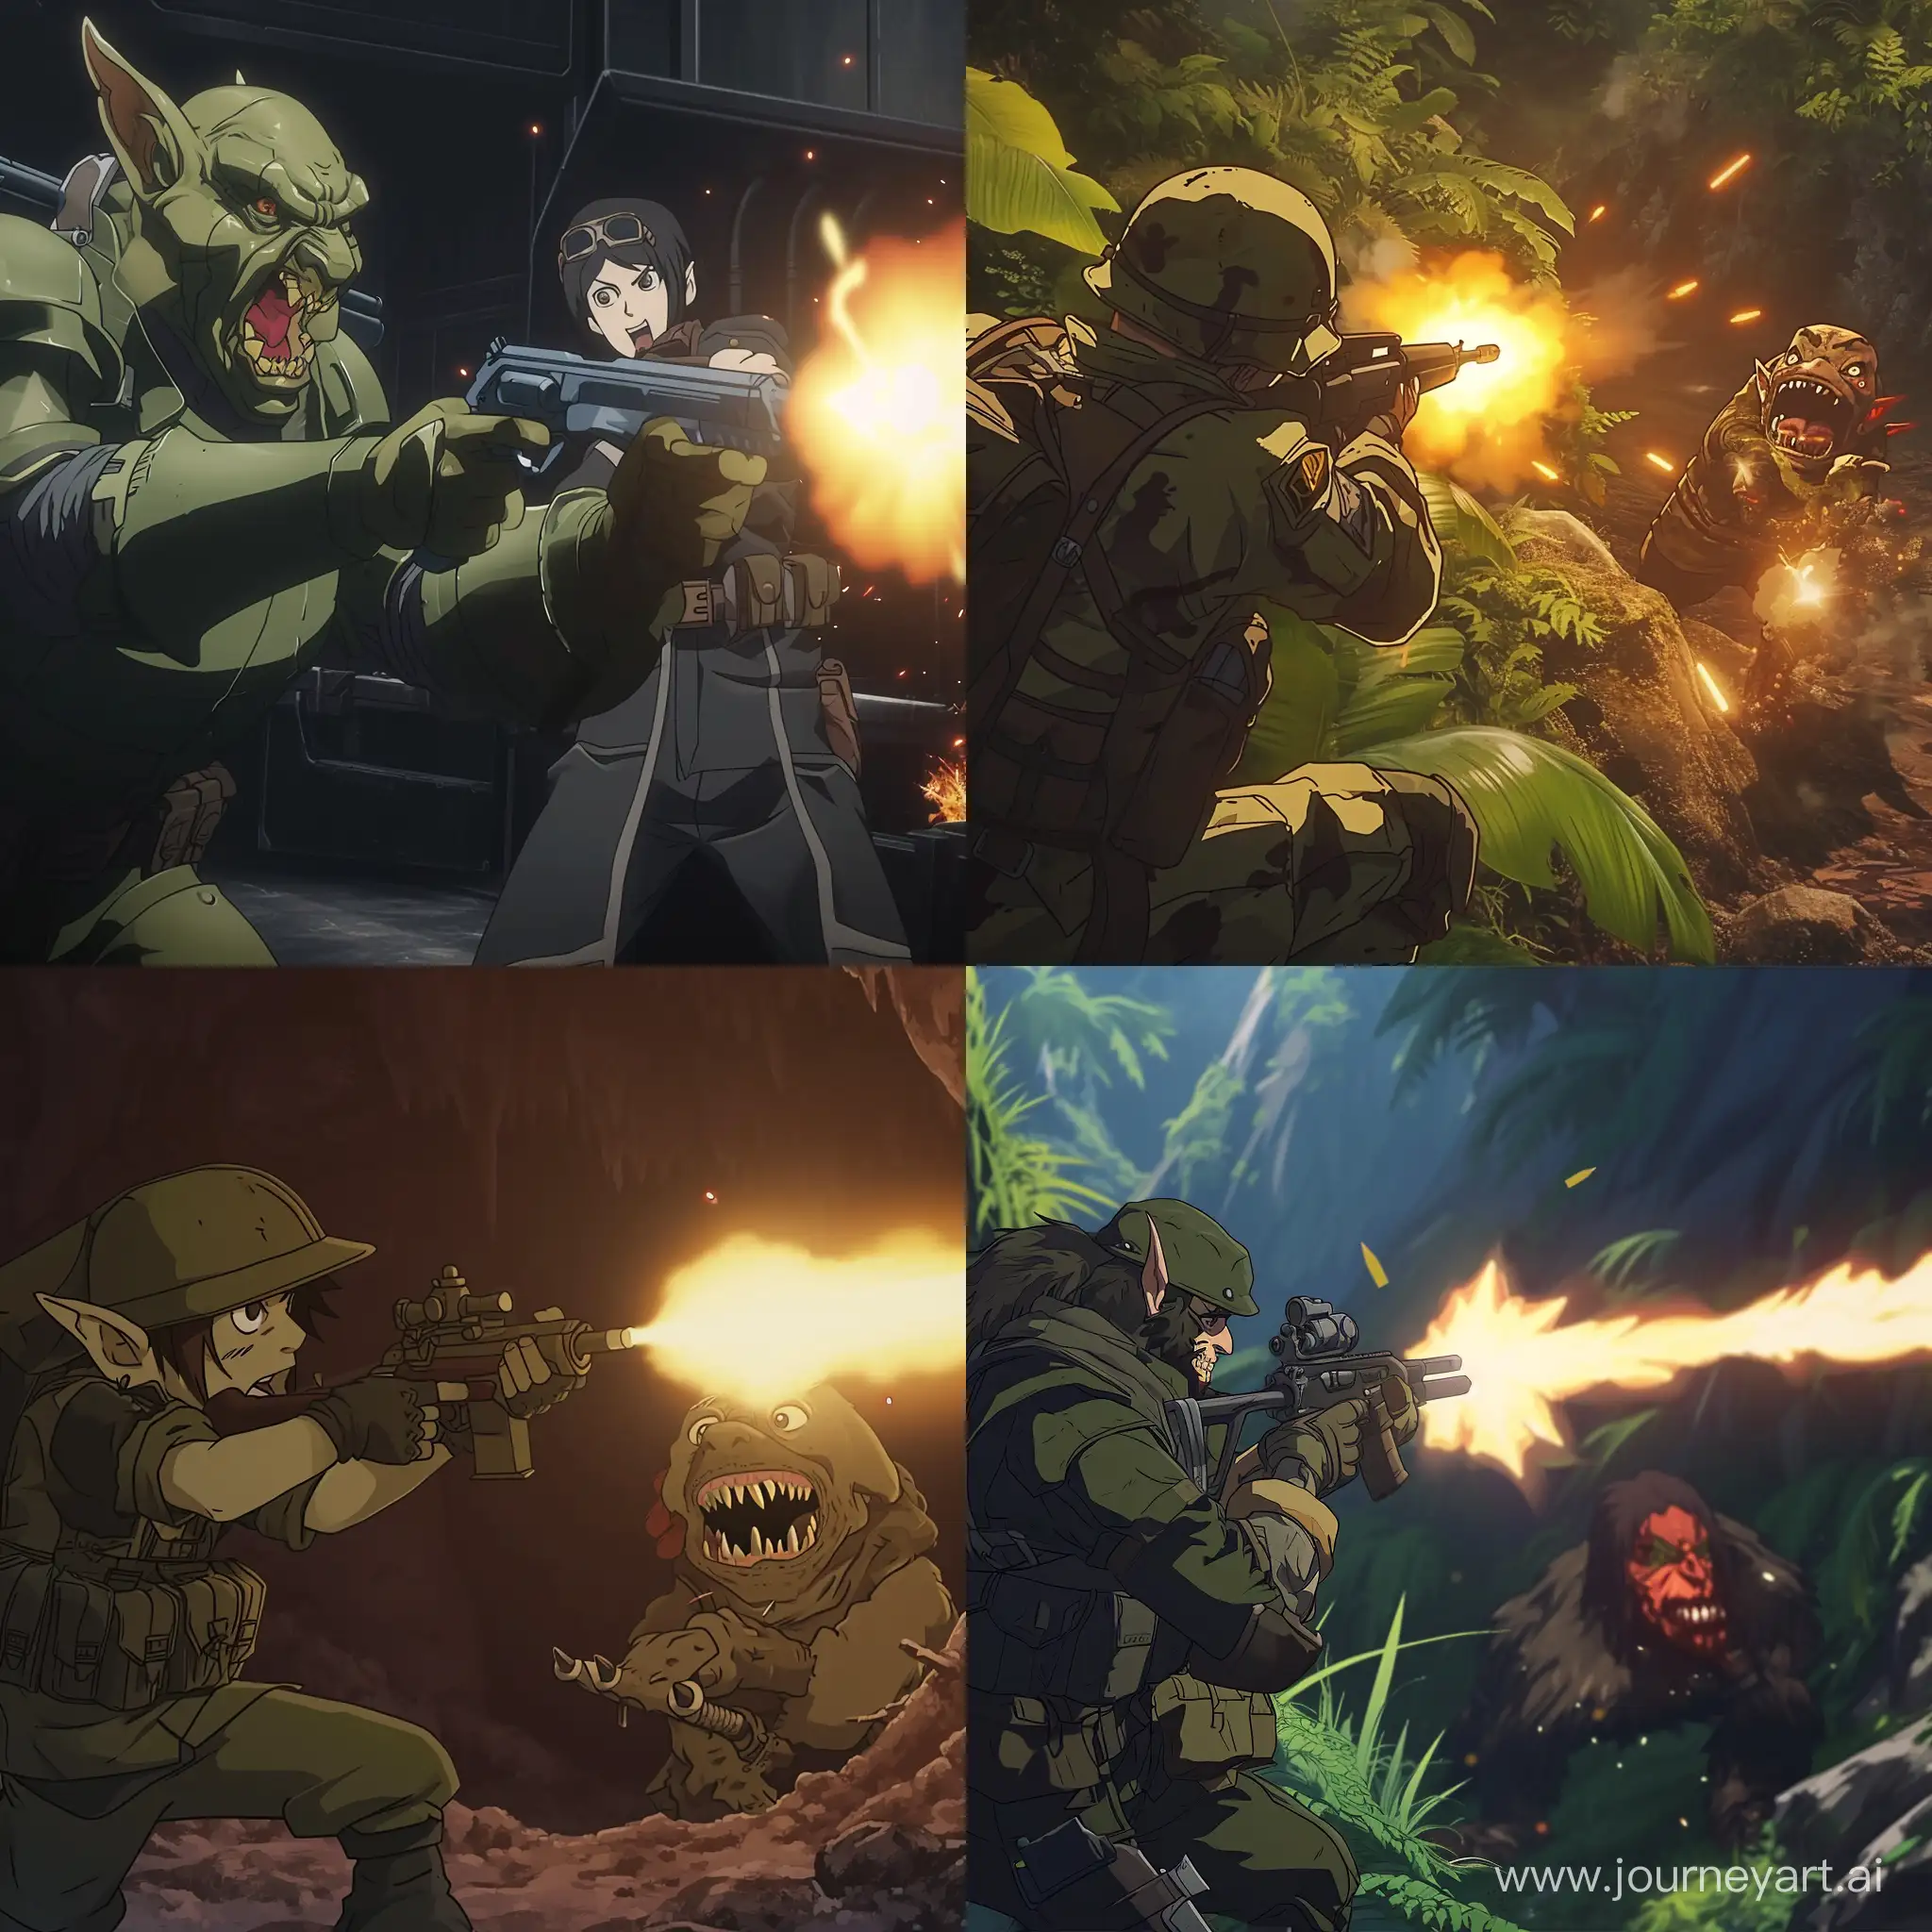 Anime-Soldier-Engaging-Goblin-in-Intense-Battle-Scene